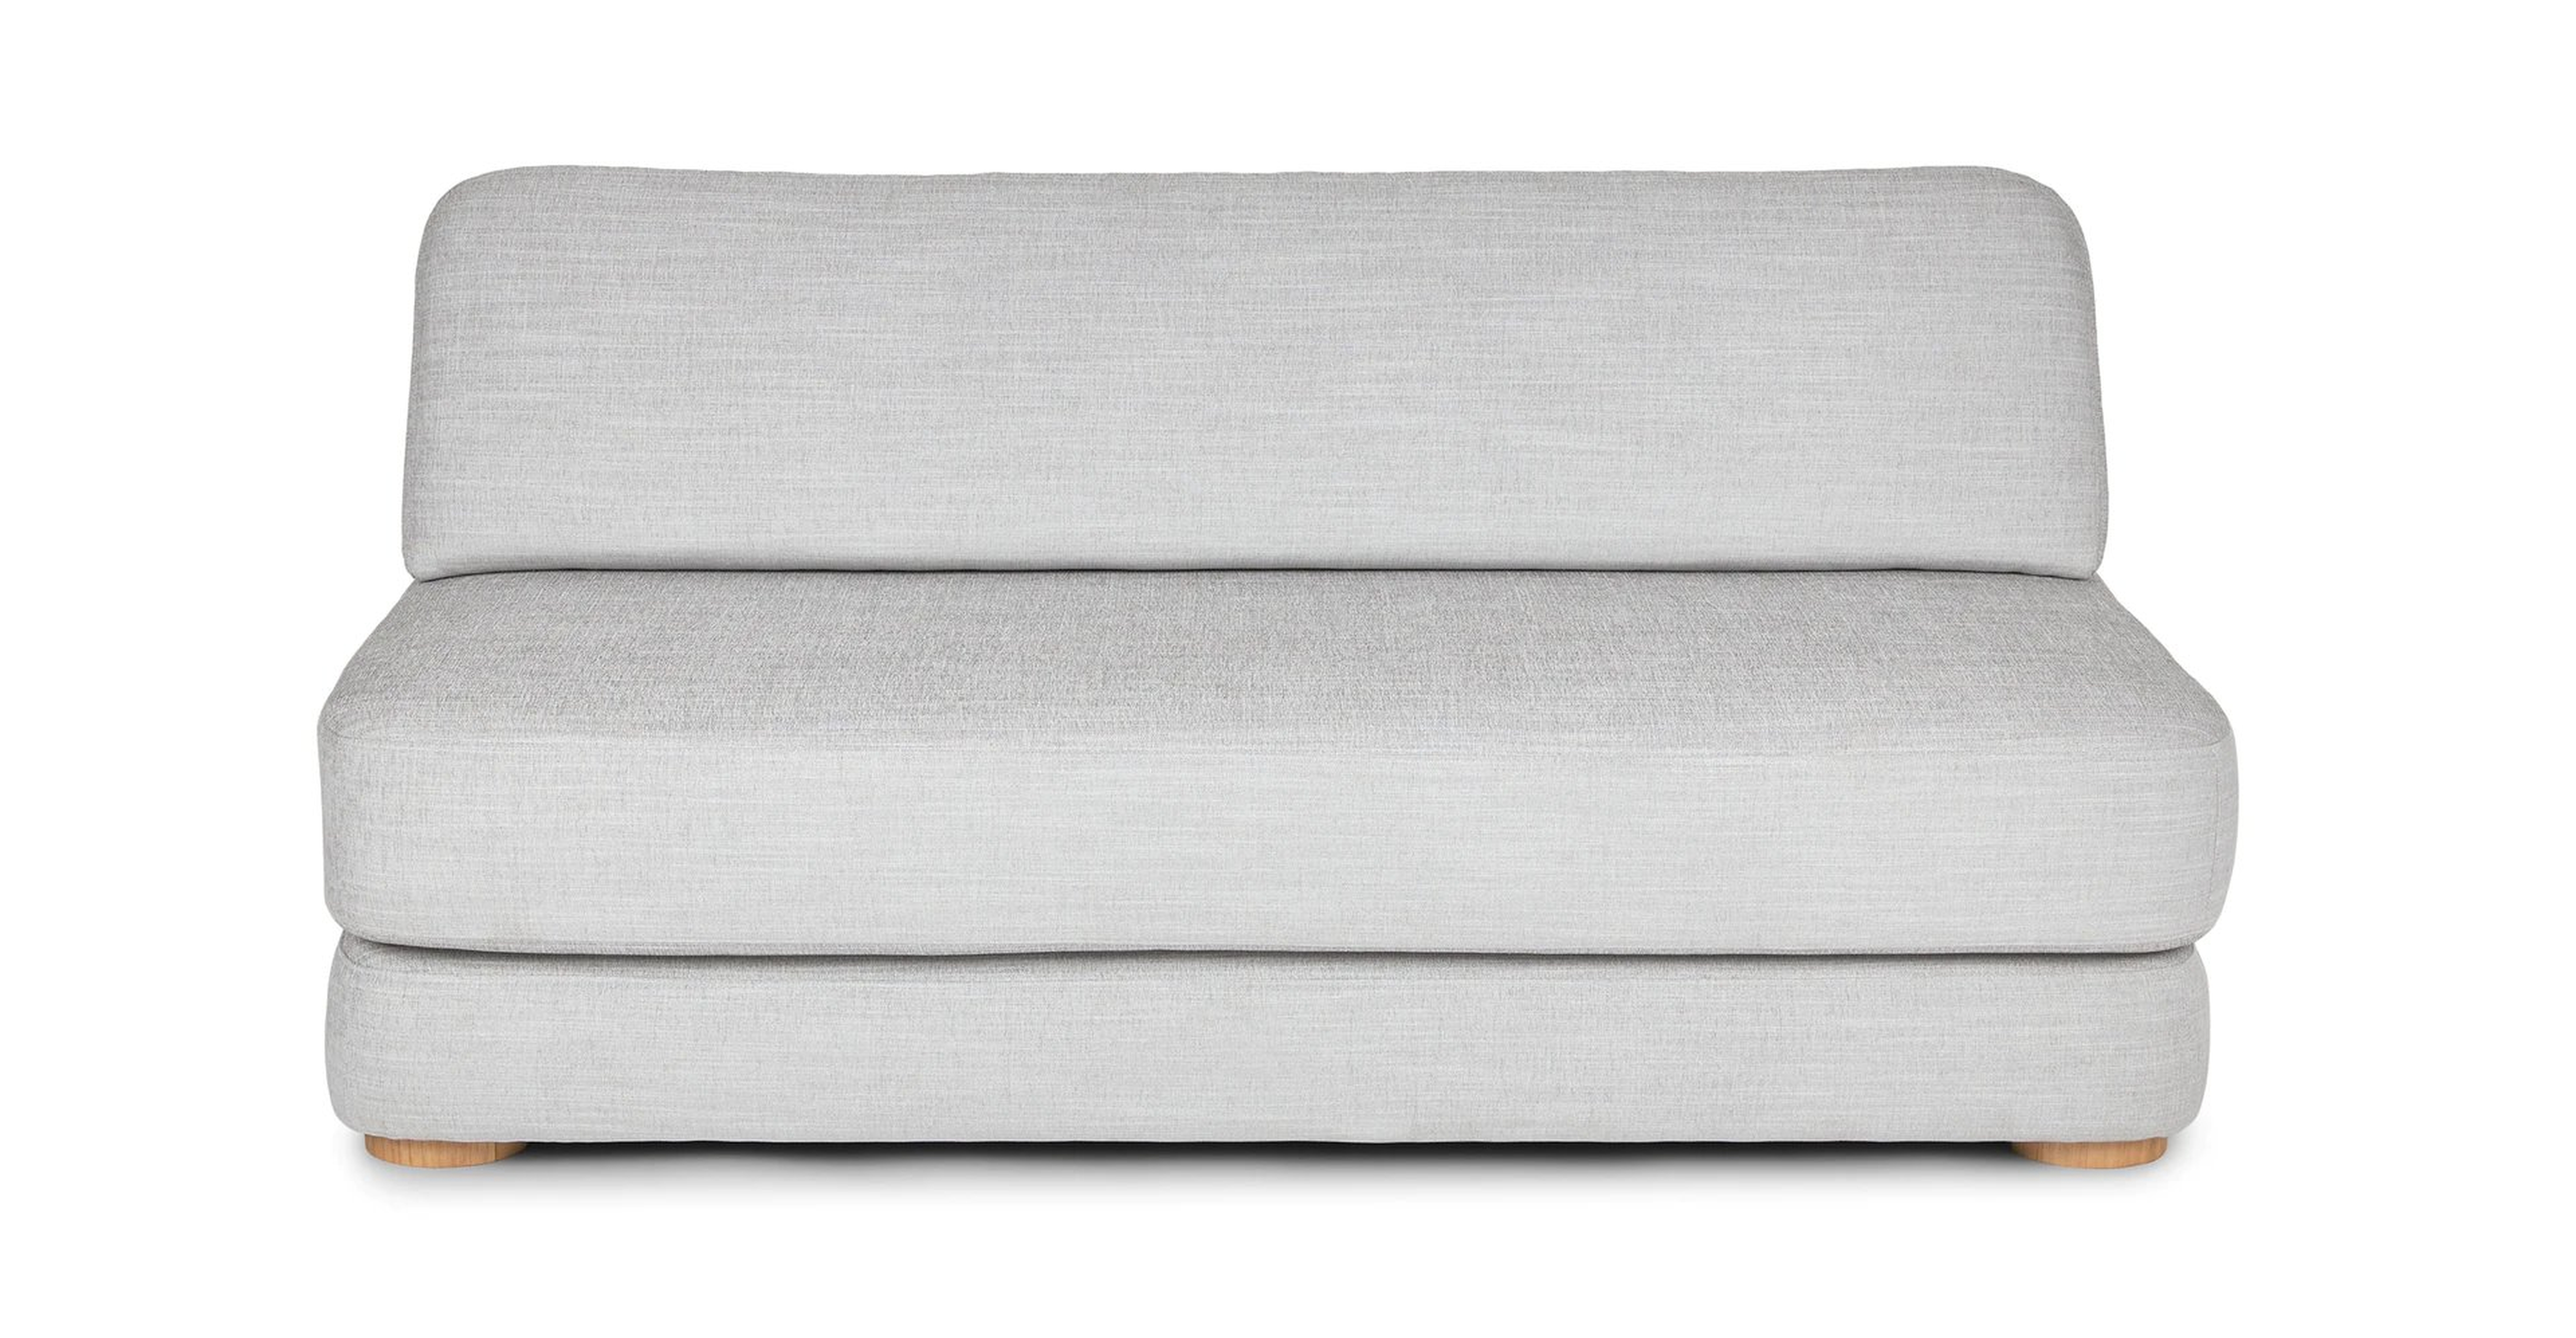 Simplis Froth Gray Sofa - Article